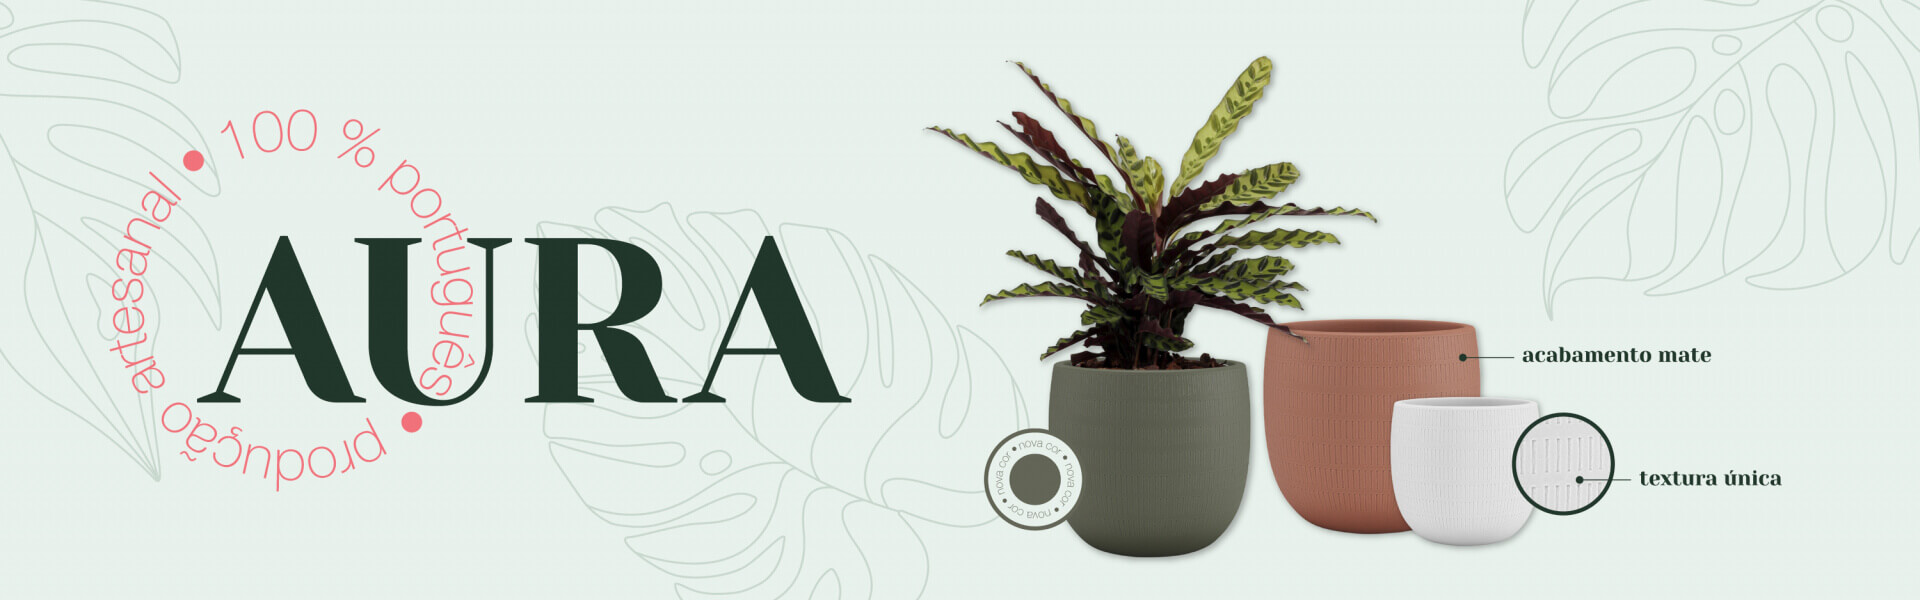 nova loja online bioma plants vaso aura